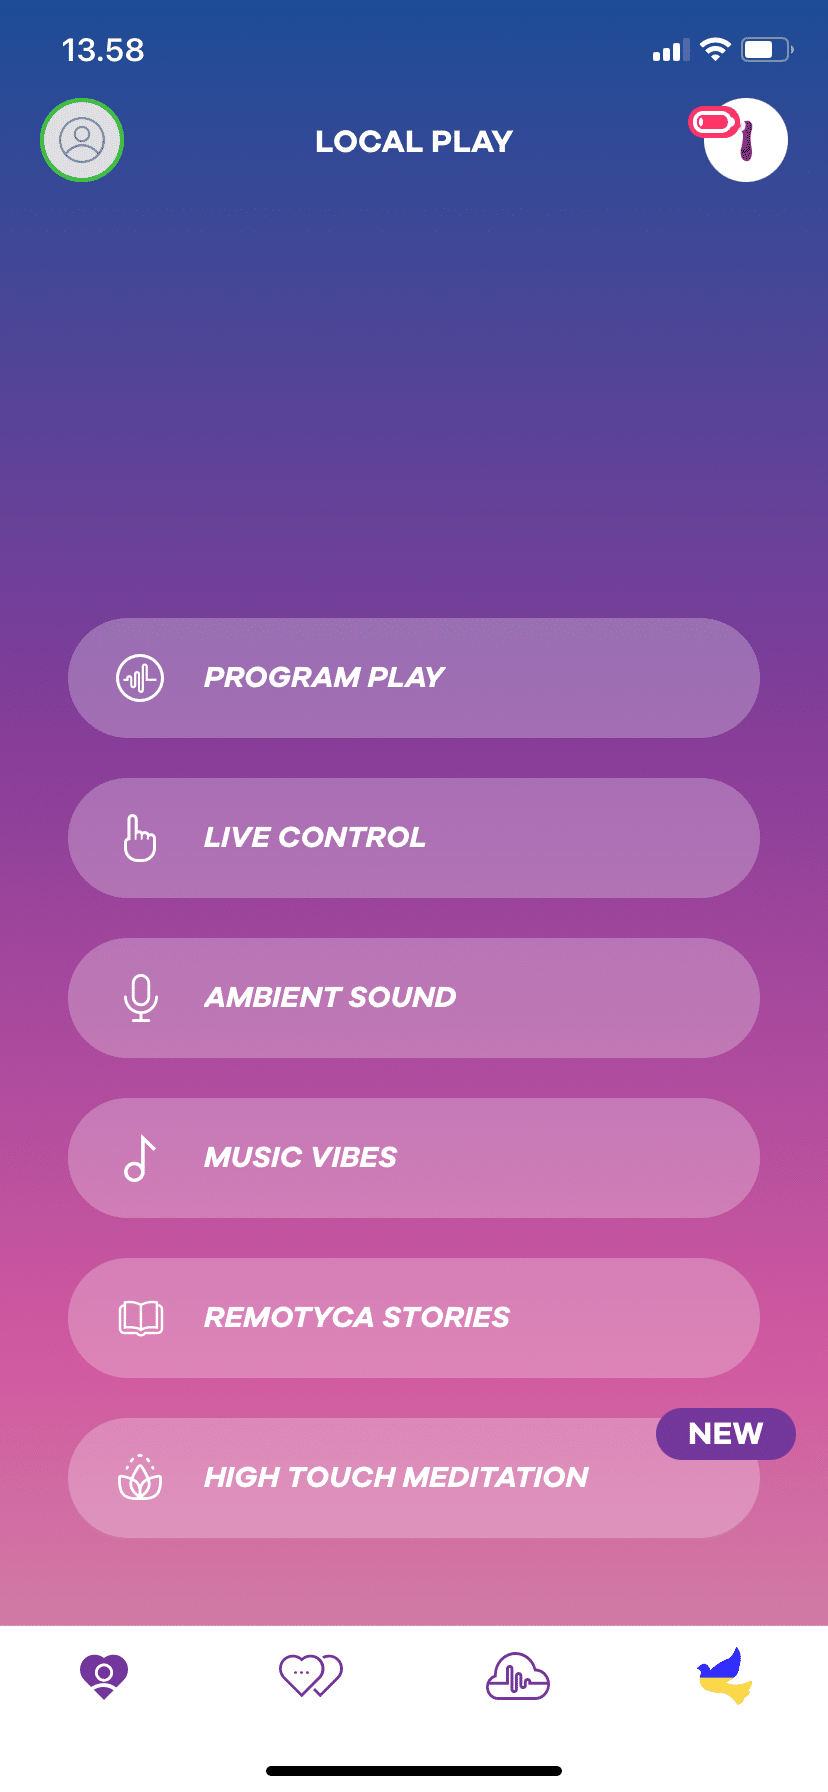 Satisfyer Connect App